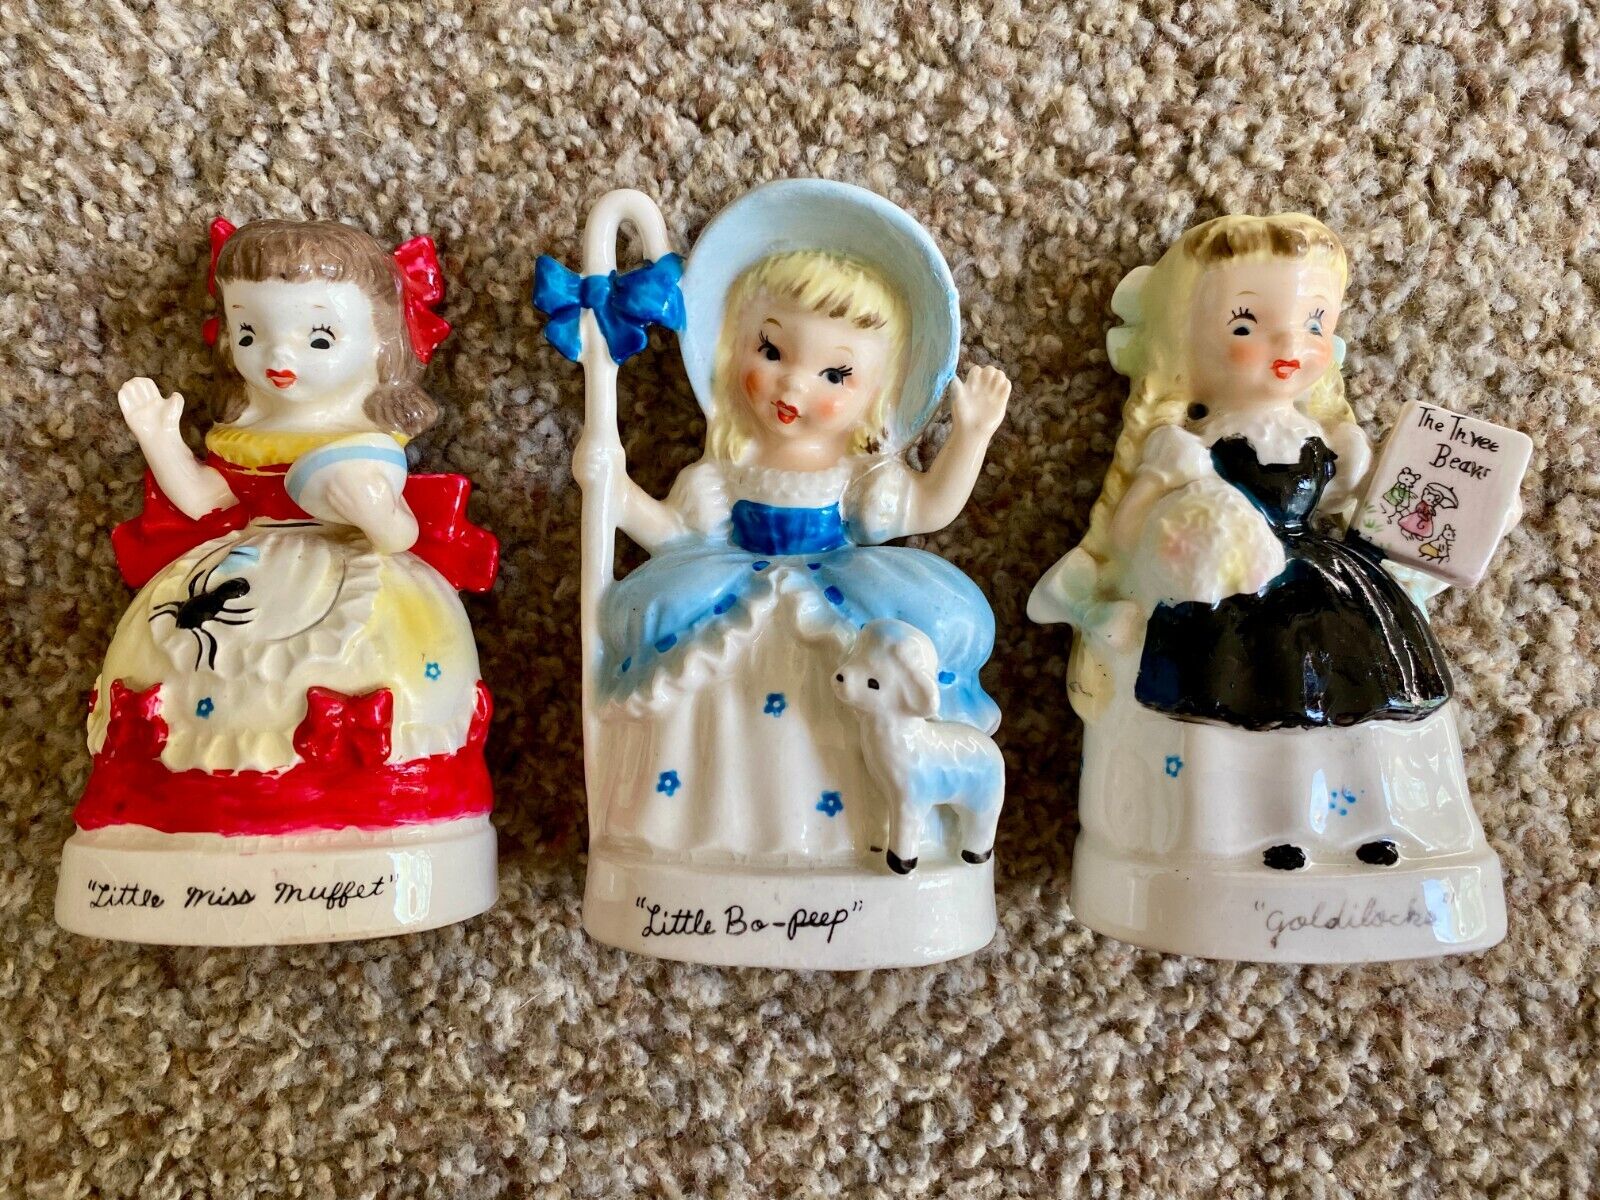 Rare Napco A1943 Figurines: Little Miss Muffet, Little Bo-Peep & Goldilocks